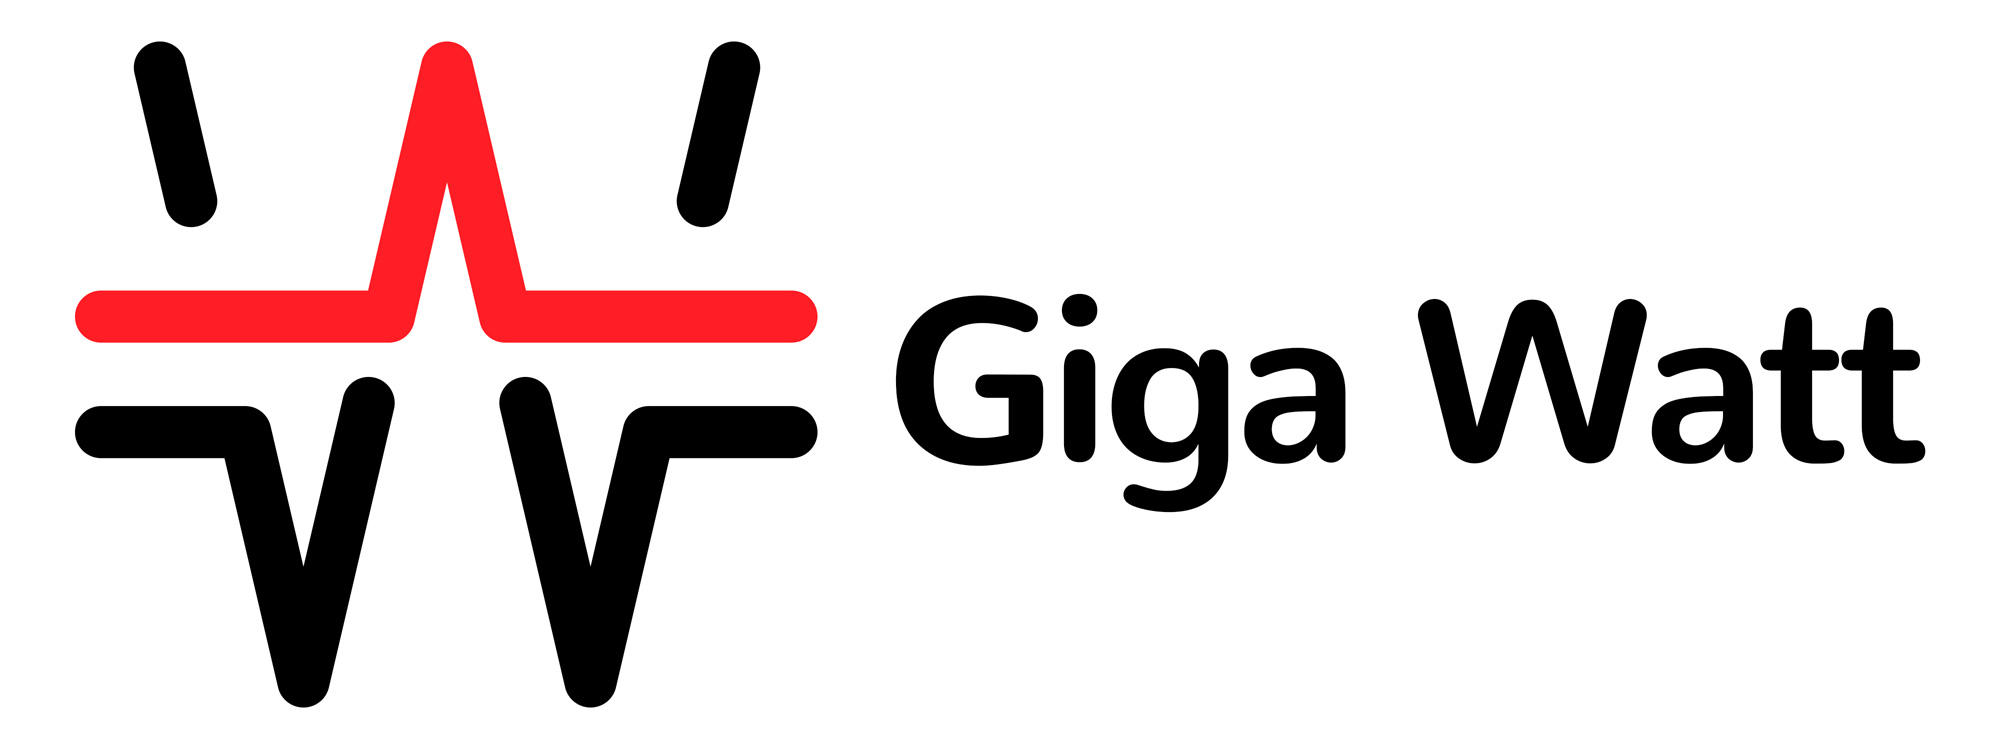 Giga Watt Becomes the Latest Bitcoin Mining Company to Go Bust